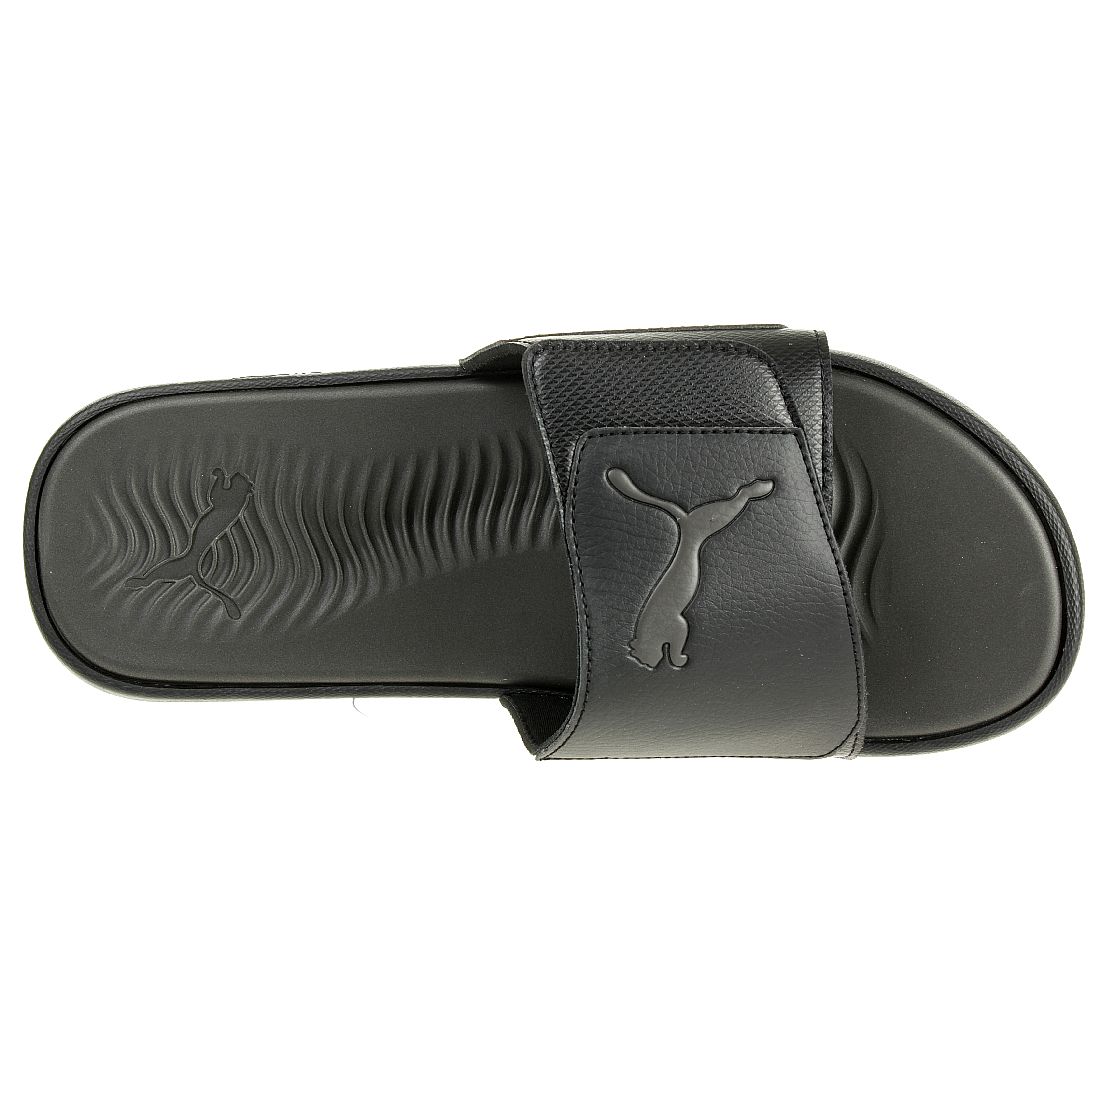 Puma Starcat Tech Unisex-Erwachsene Sandalen Softfoam schwarz 367228 01